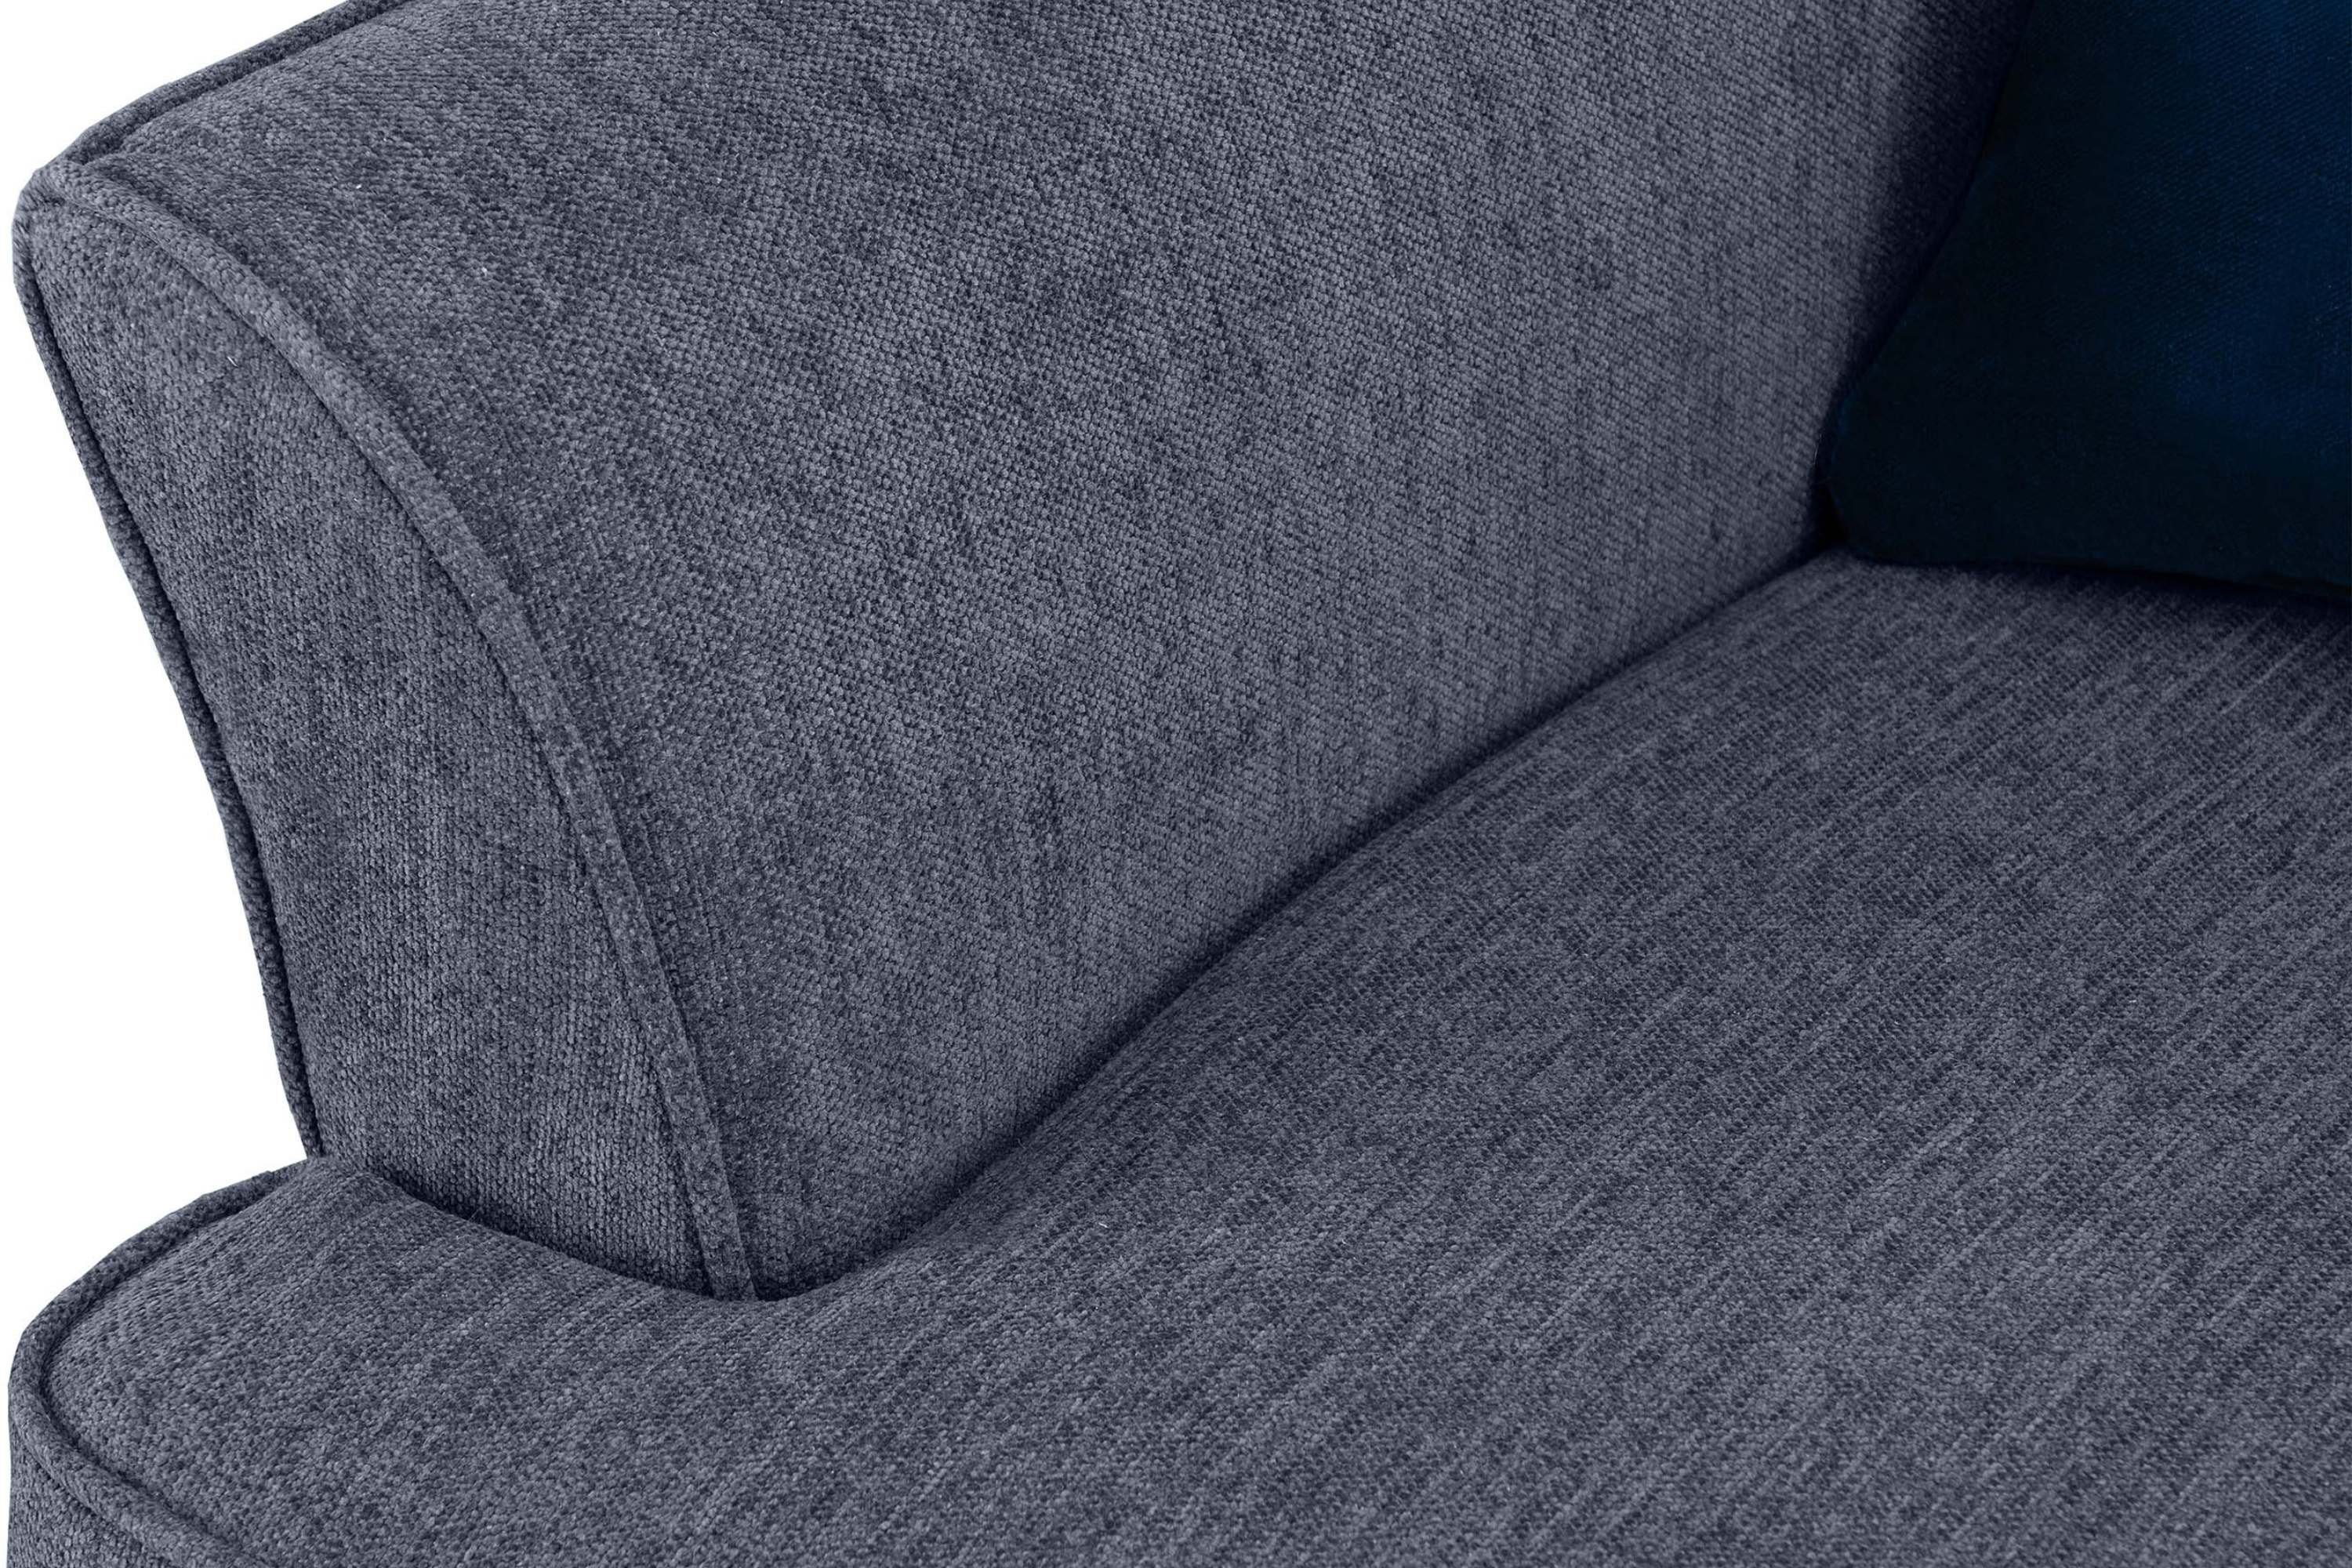 Konsimo Ohrensessel hohe STRALIS Design, Sessel, Kissen Füße, inklusive dekorativem zeitloses